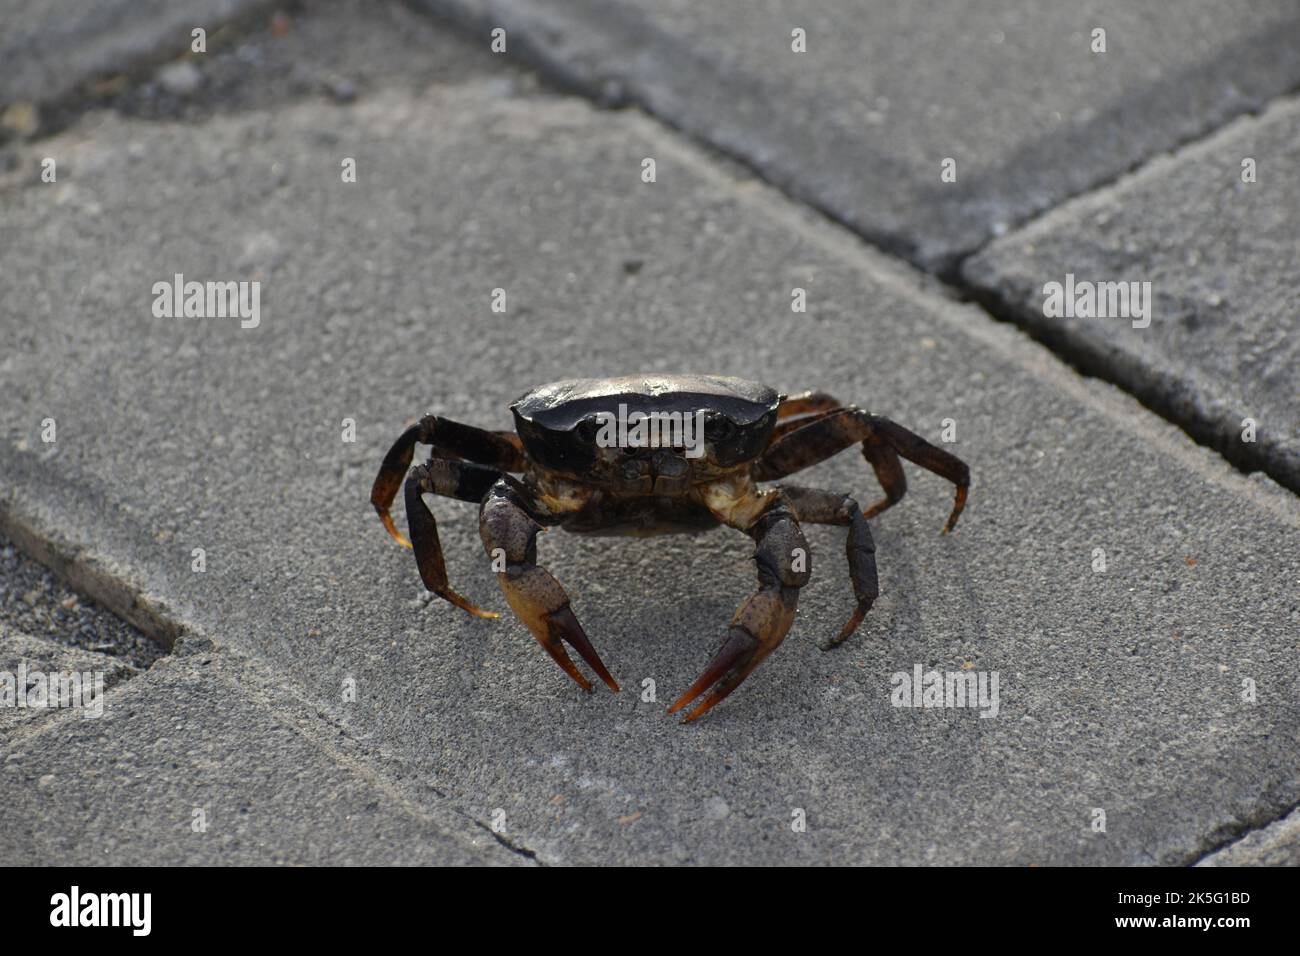 A freshwater crab walking sideways on paving block. Java. Indonesia. Stock Photo